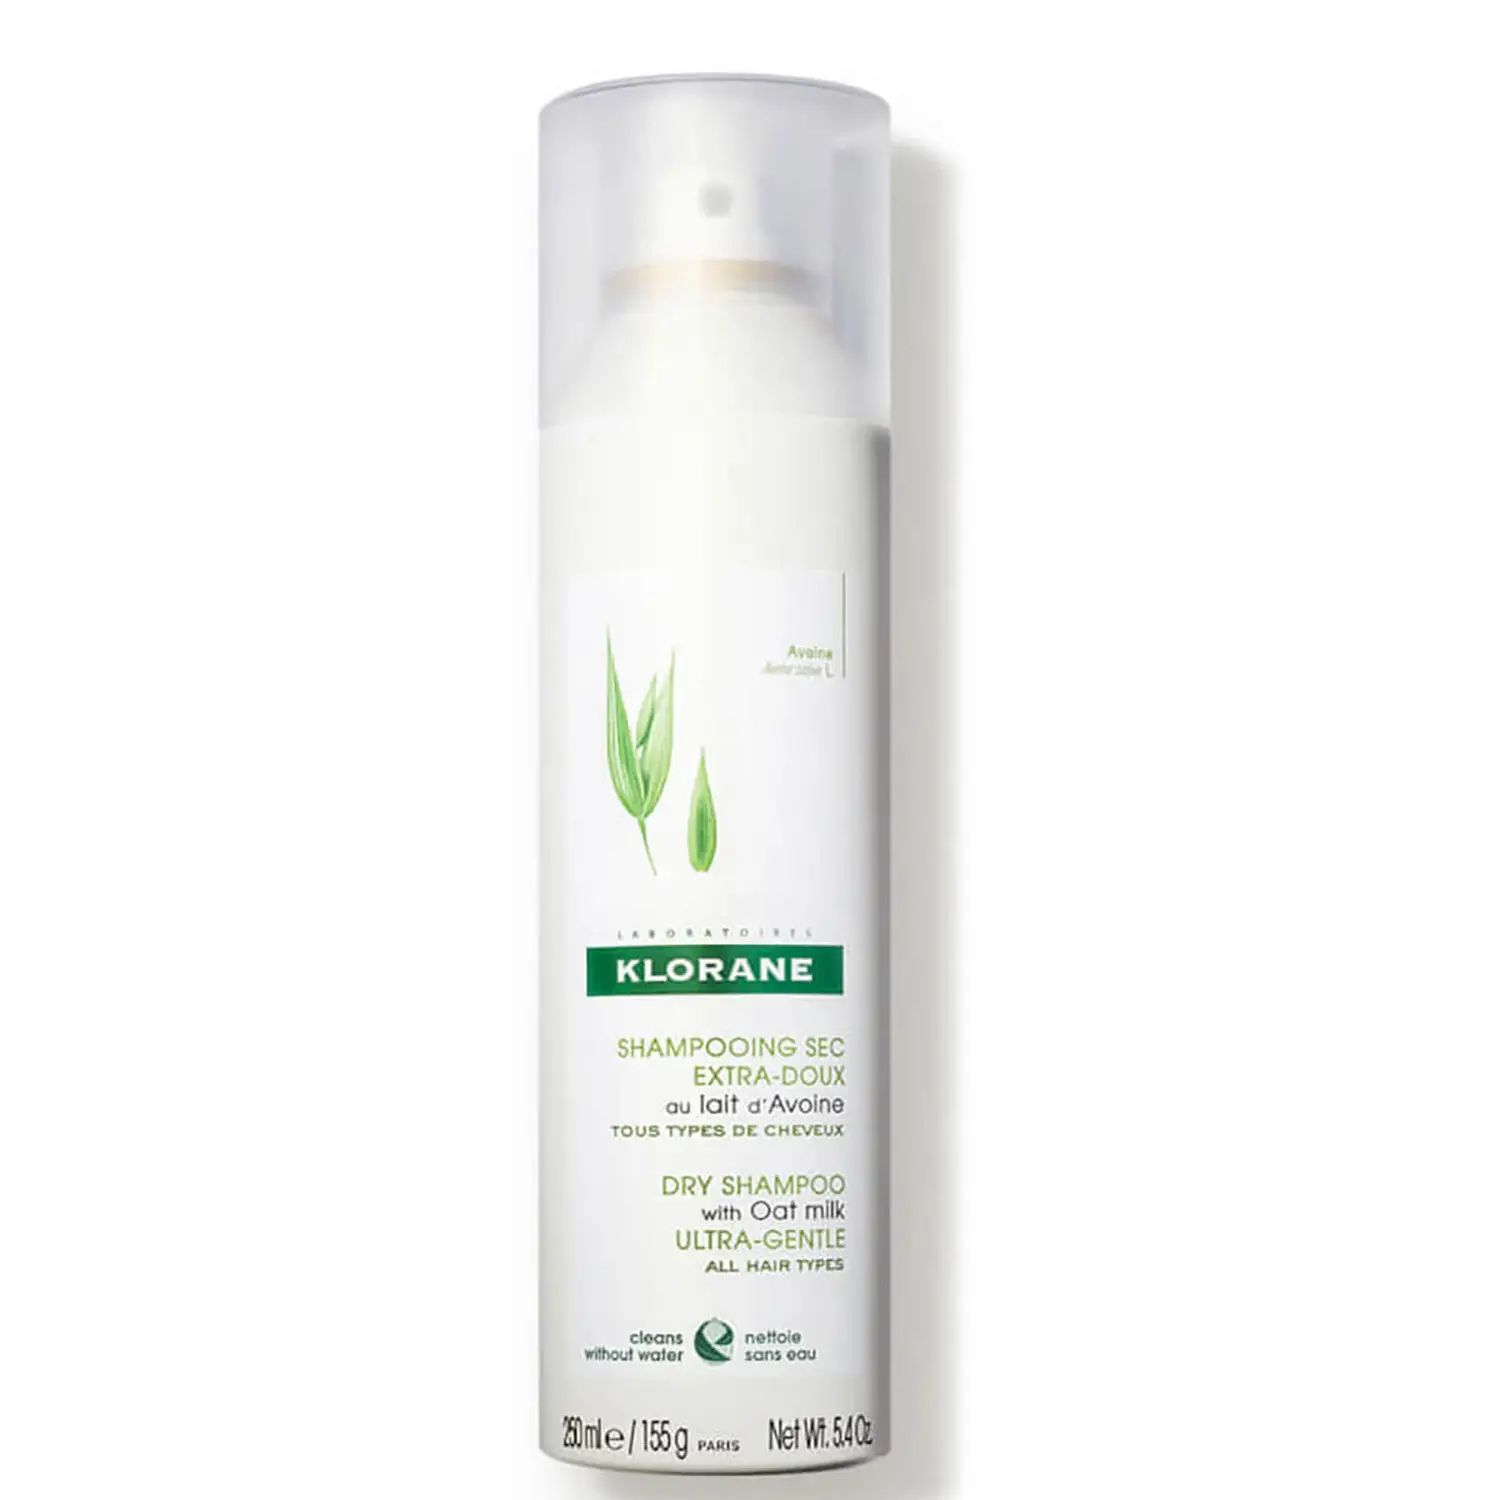 KLORANE Dry Shampoo with Oat Milk - All Hair Types (5.4 oz.) | Dermstore (US)